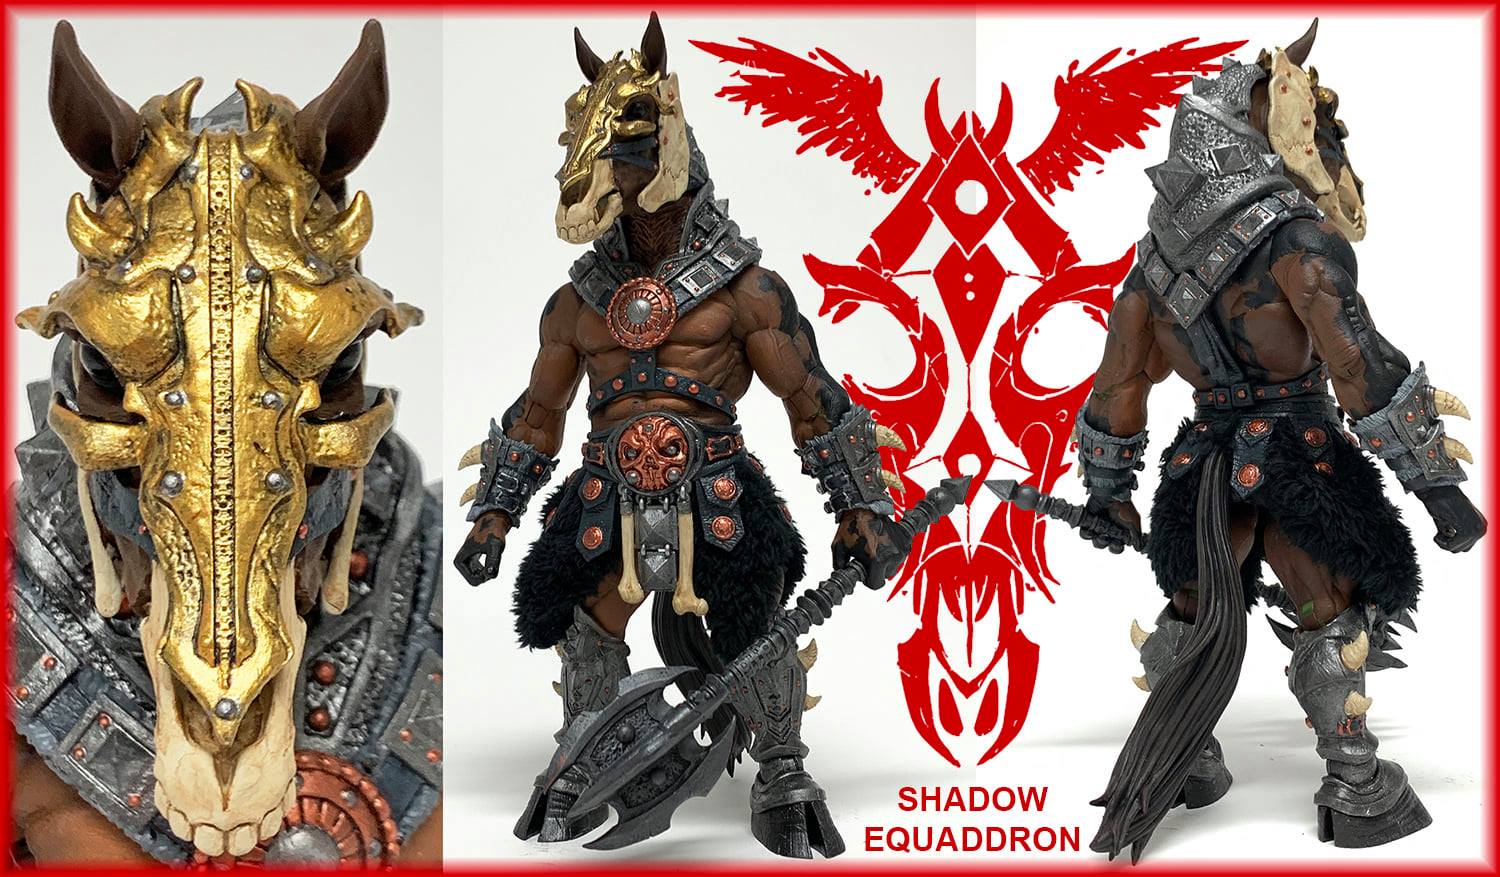 Shadow Equaddron